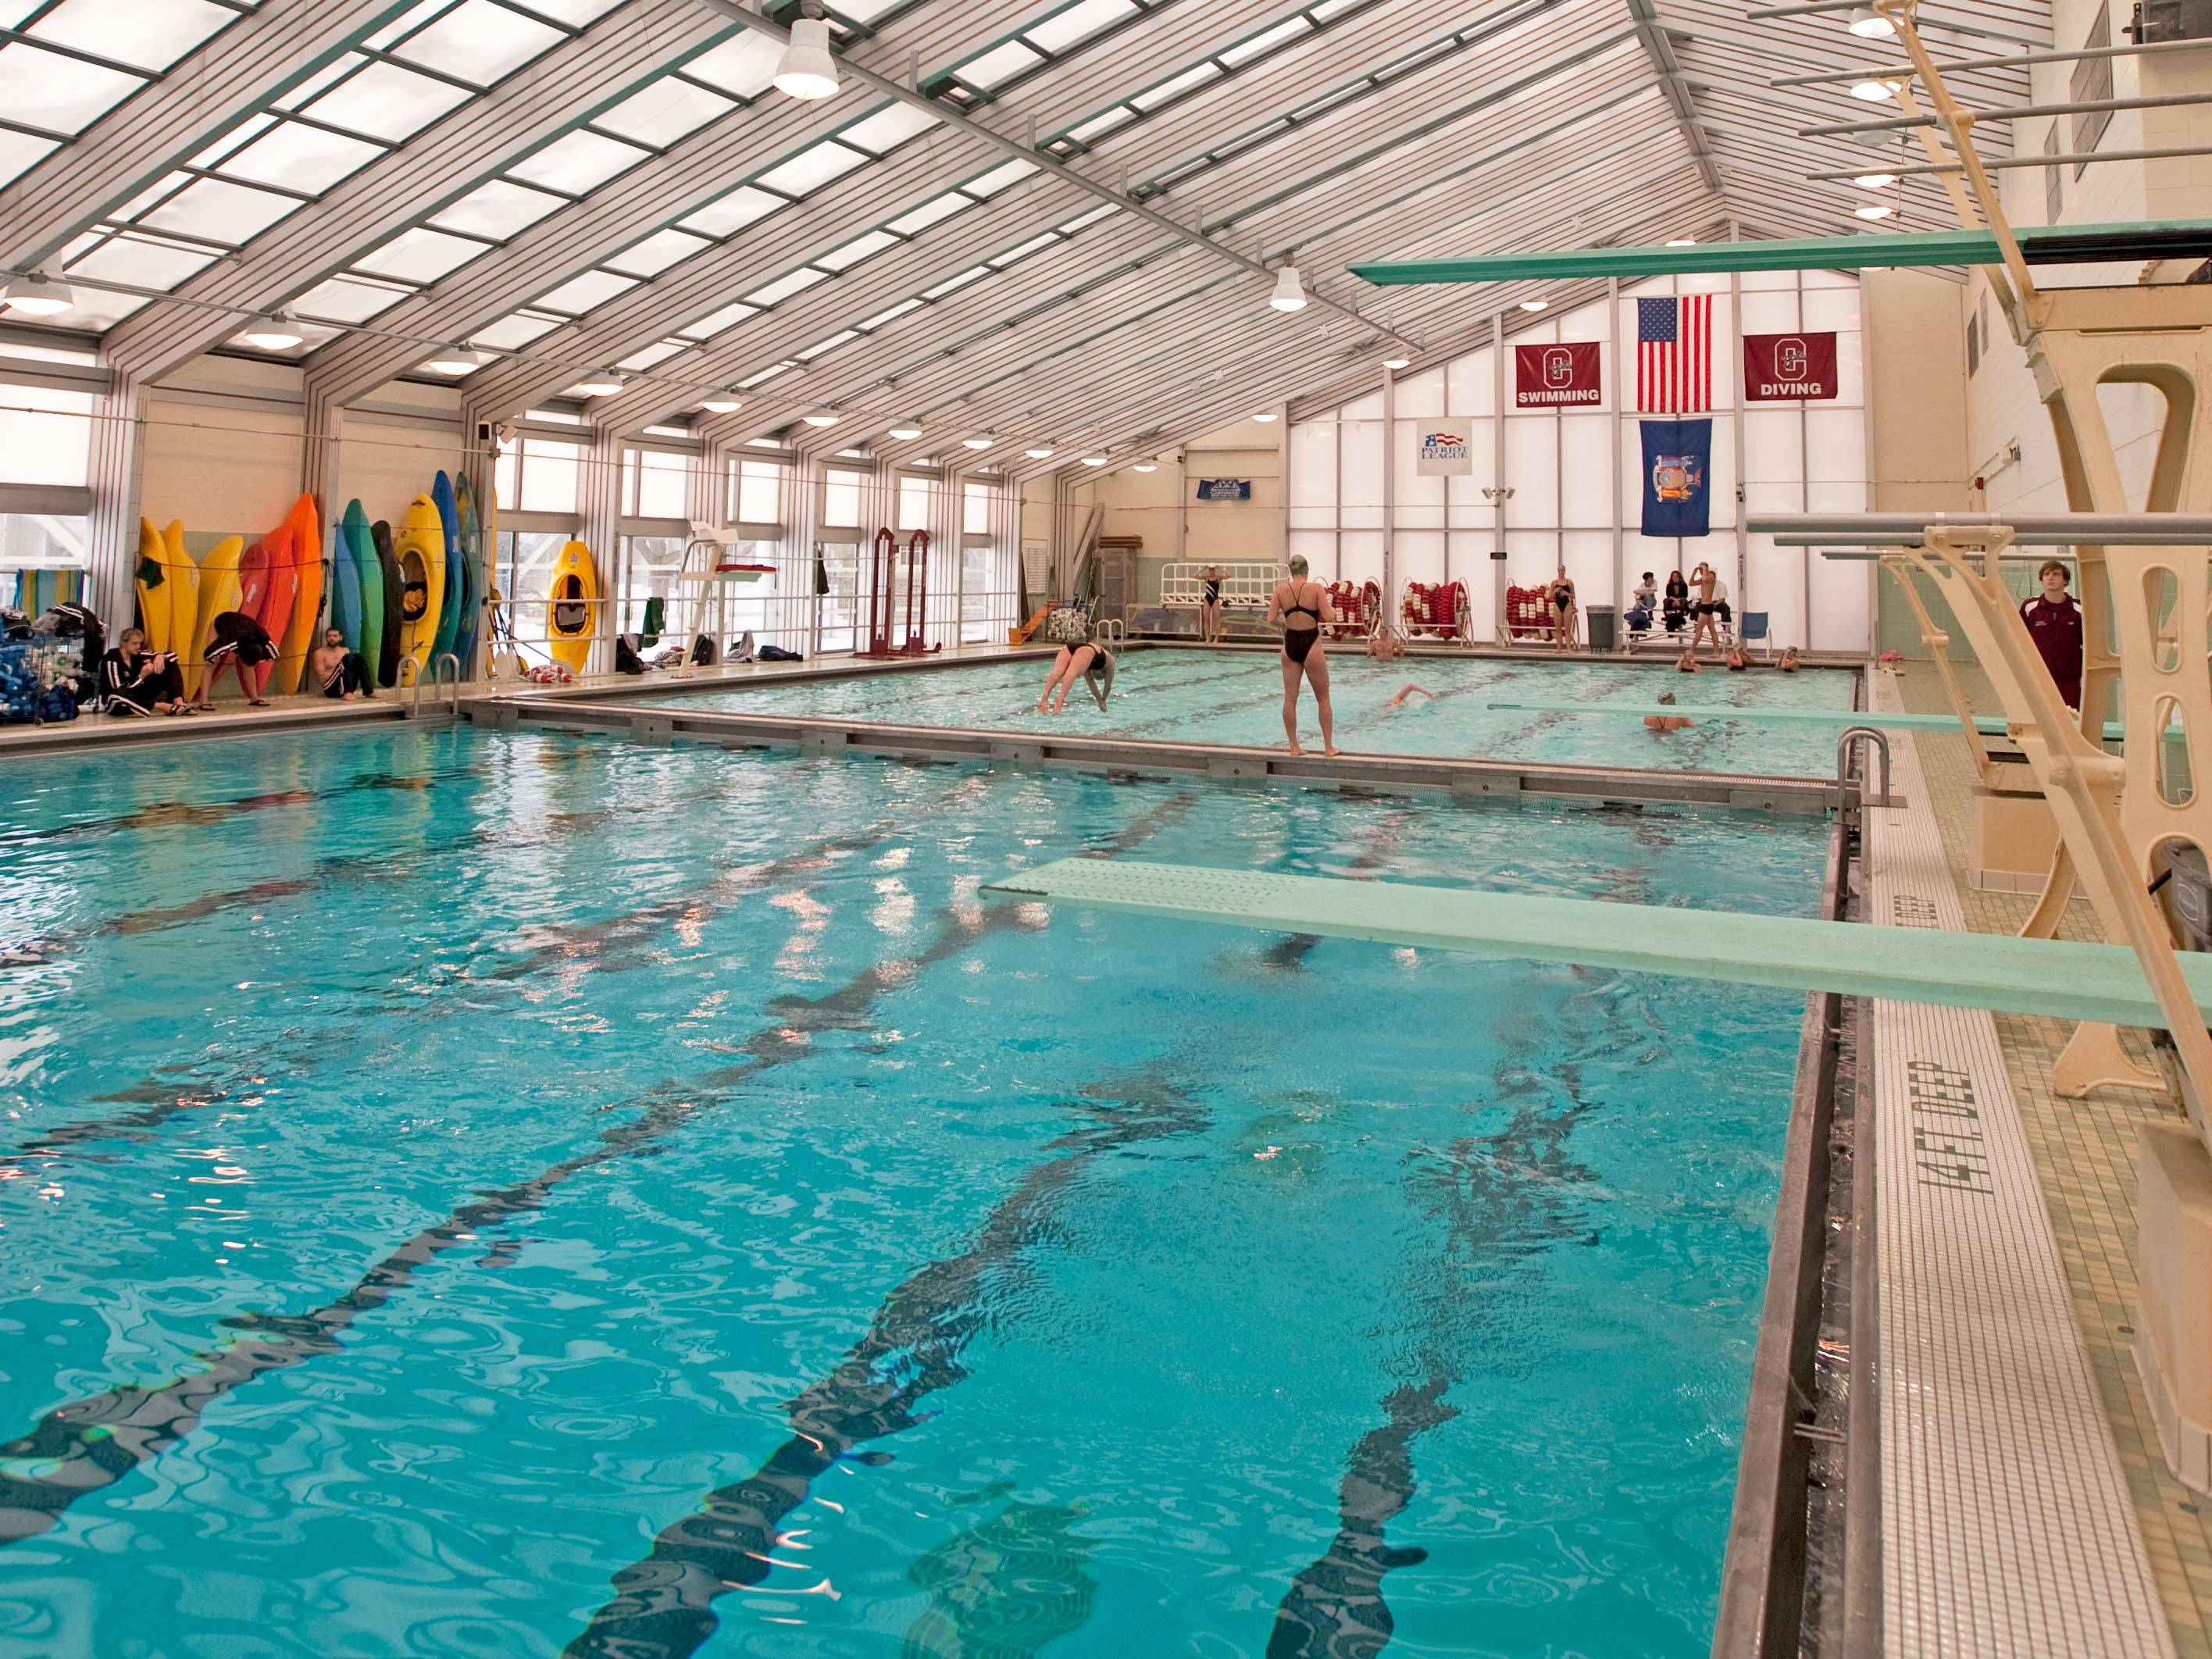 The pool in Lineberry Natatorium at Colgate University